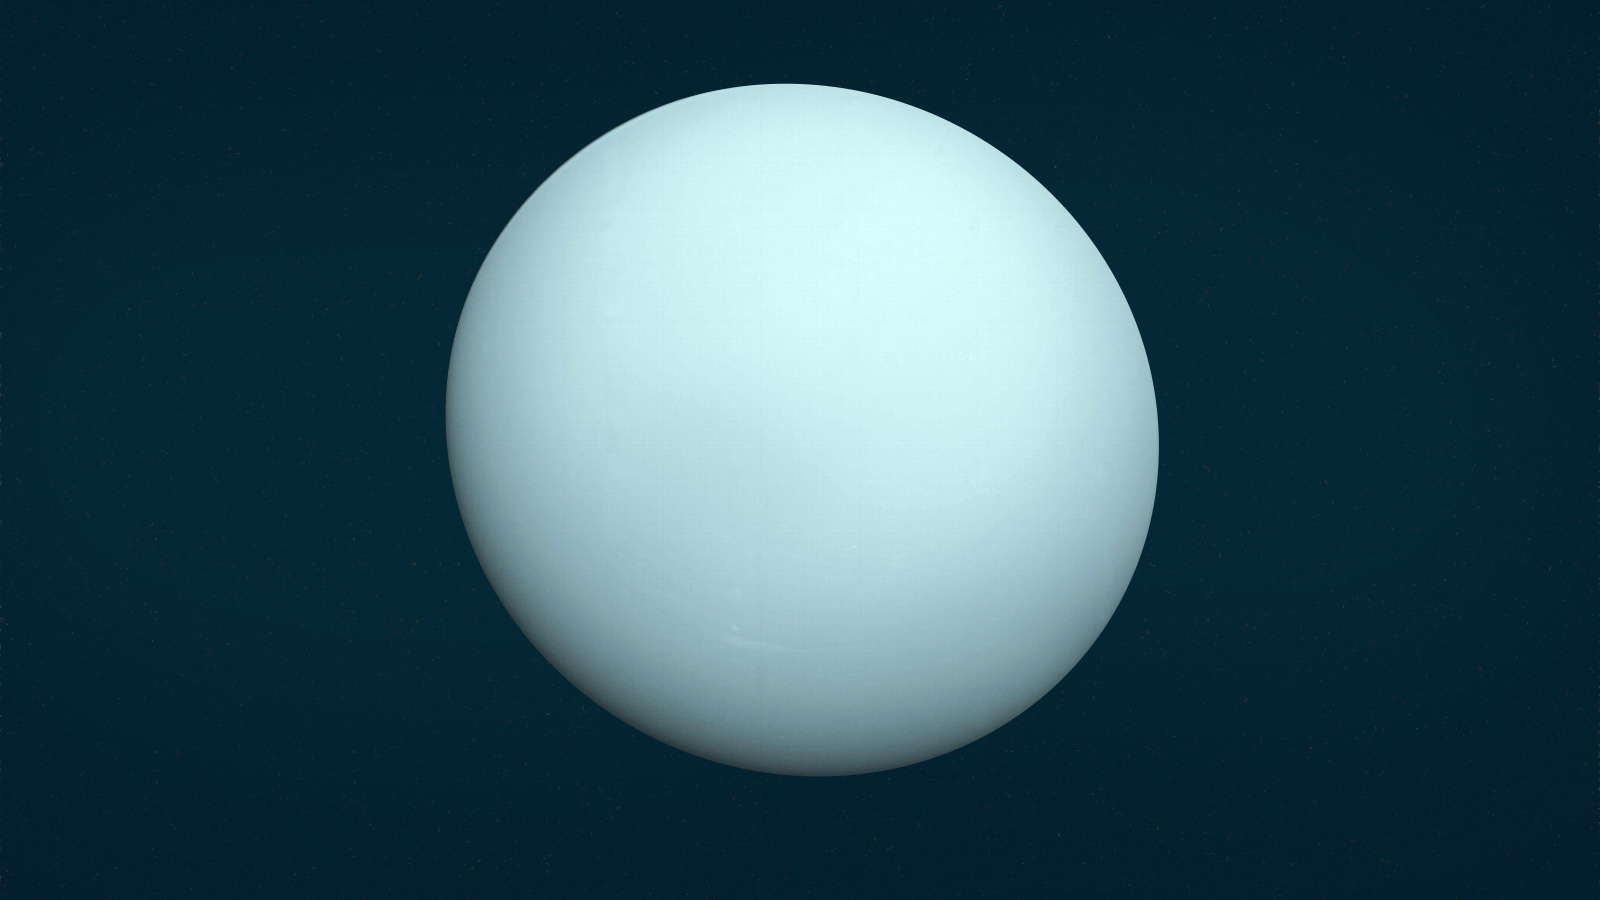 planets of our solar system - Uranus